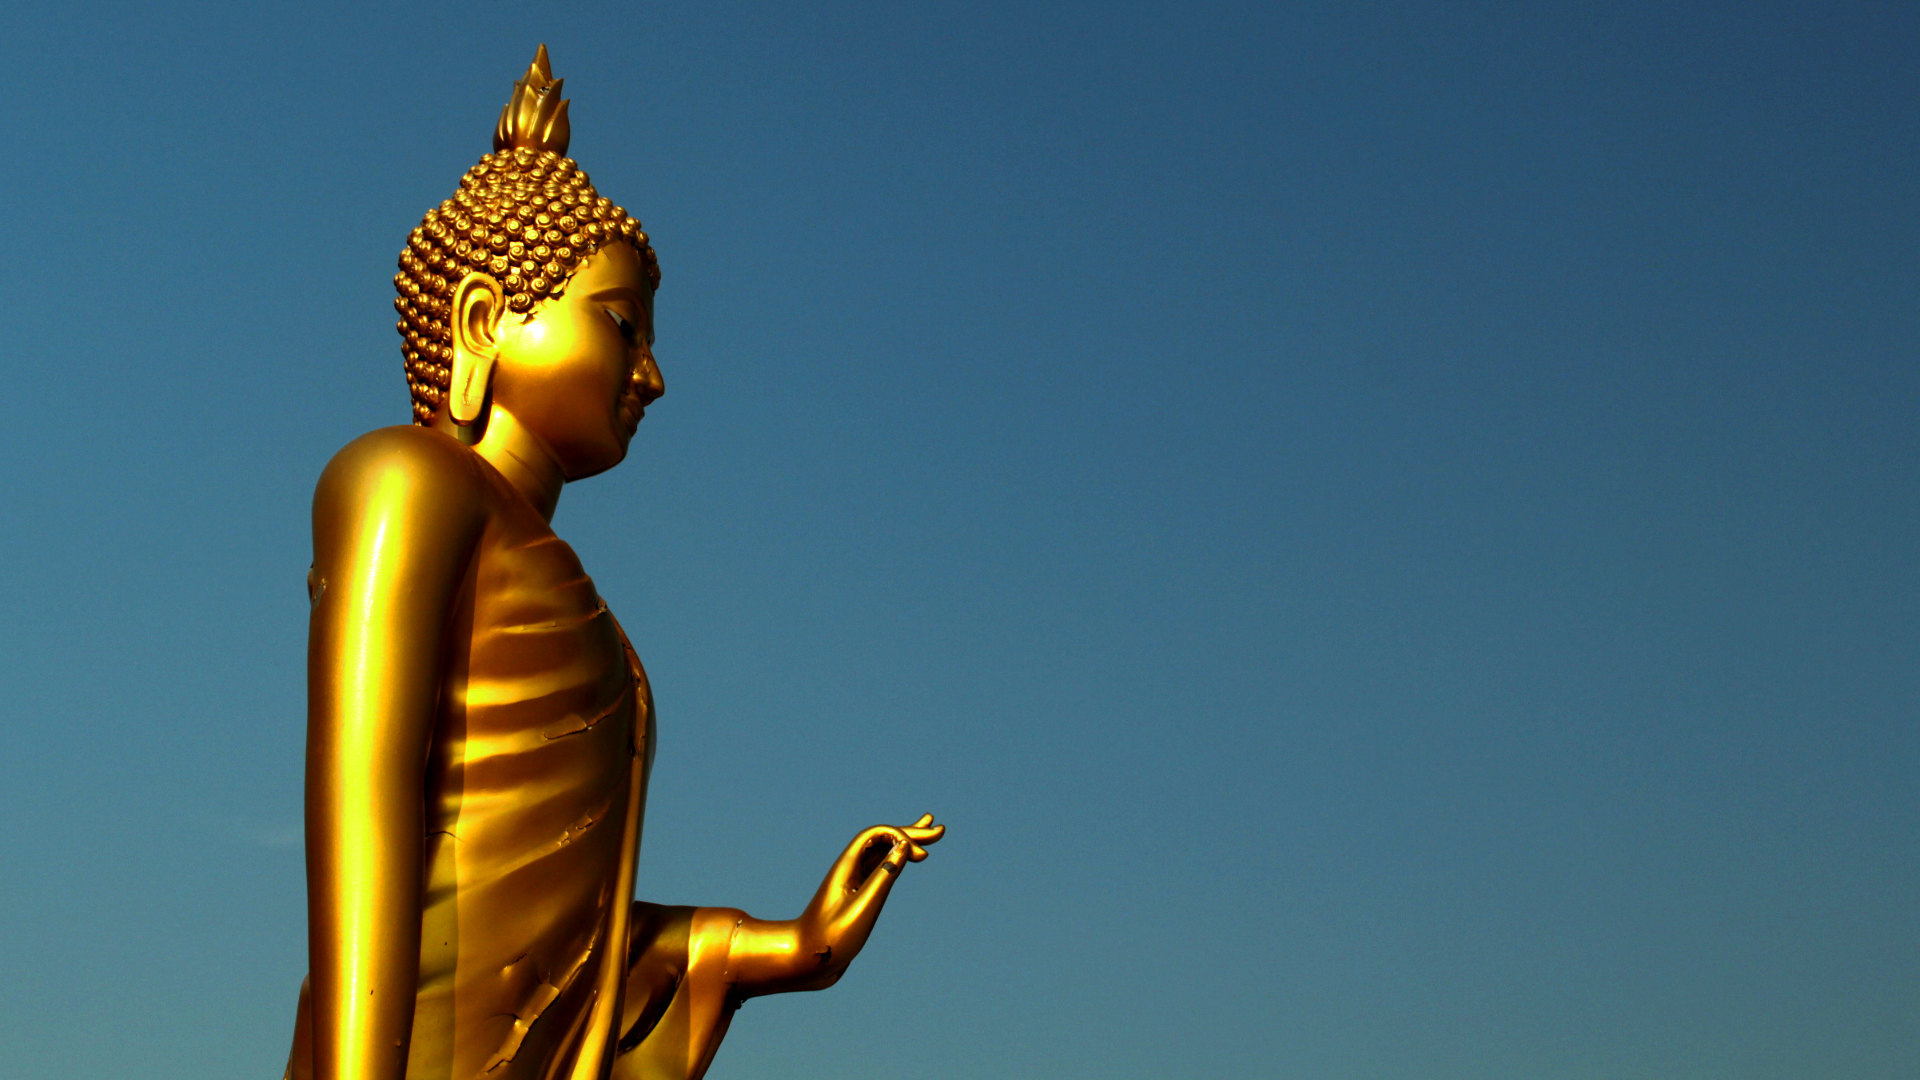 The Buddha and the sky 6